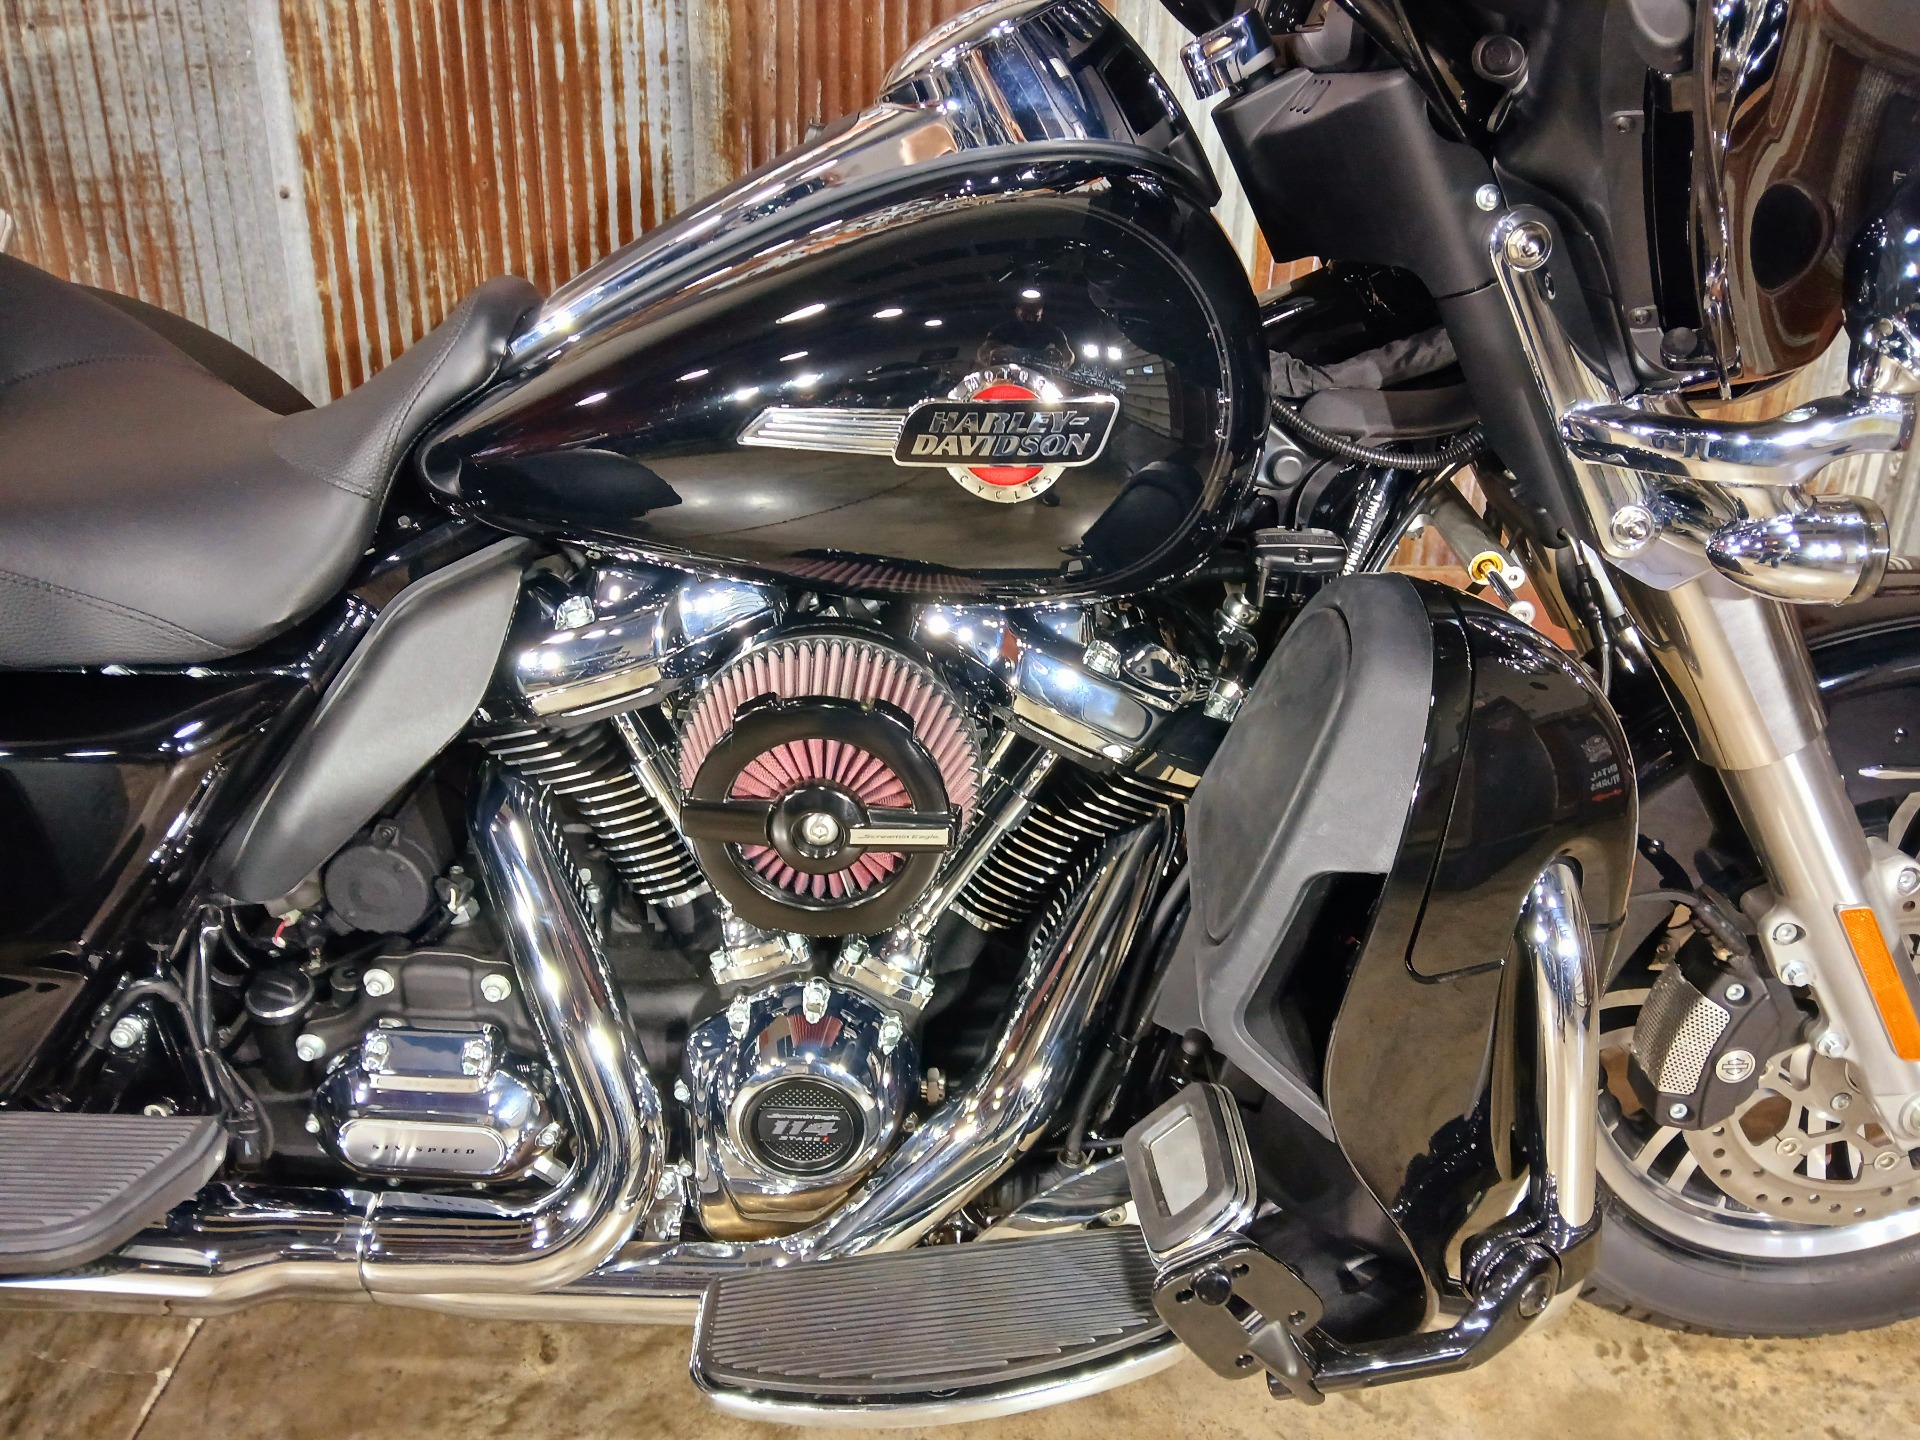 2022 Harley-Davidson Tri Glide® Ultra in Chippewa Falls, Wisconsin - Photo 2